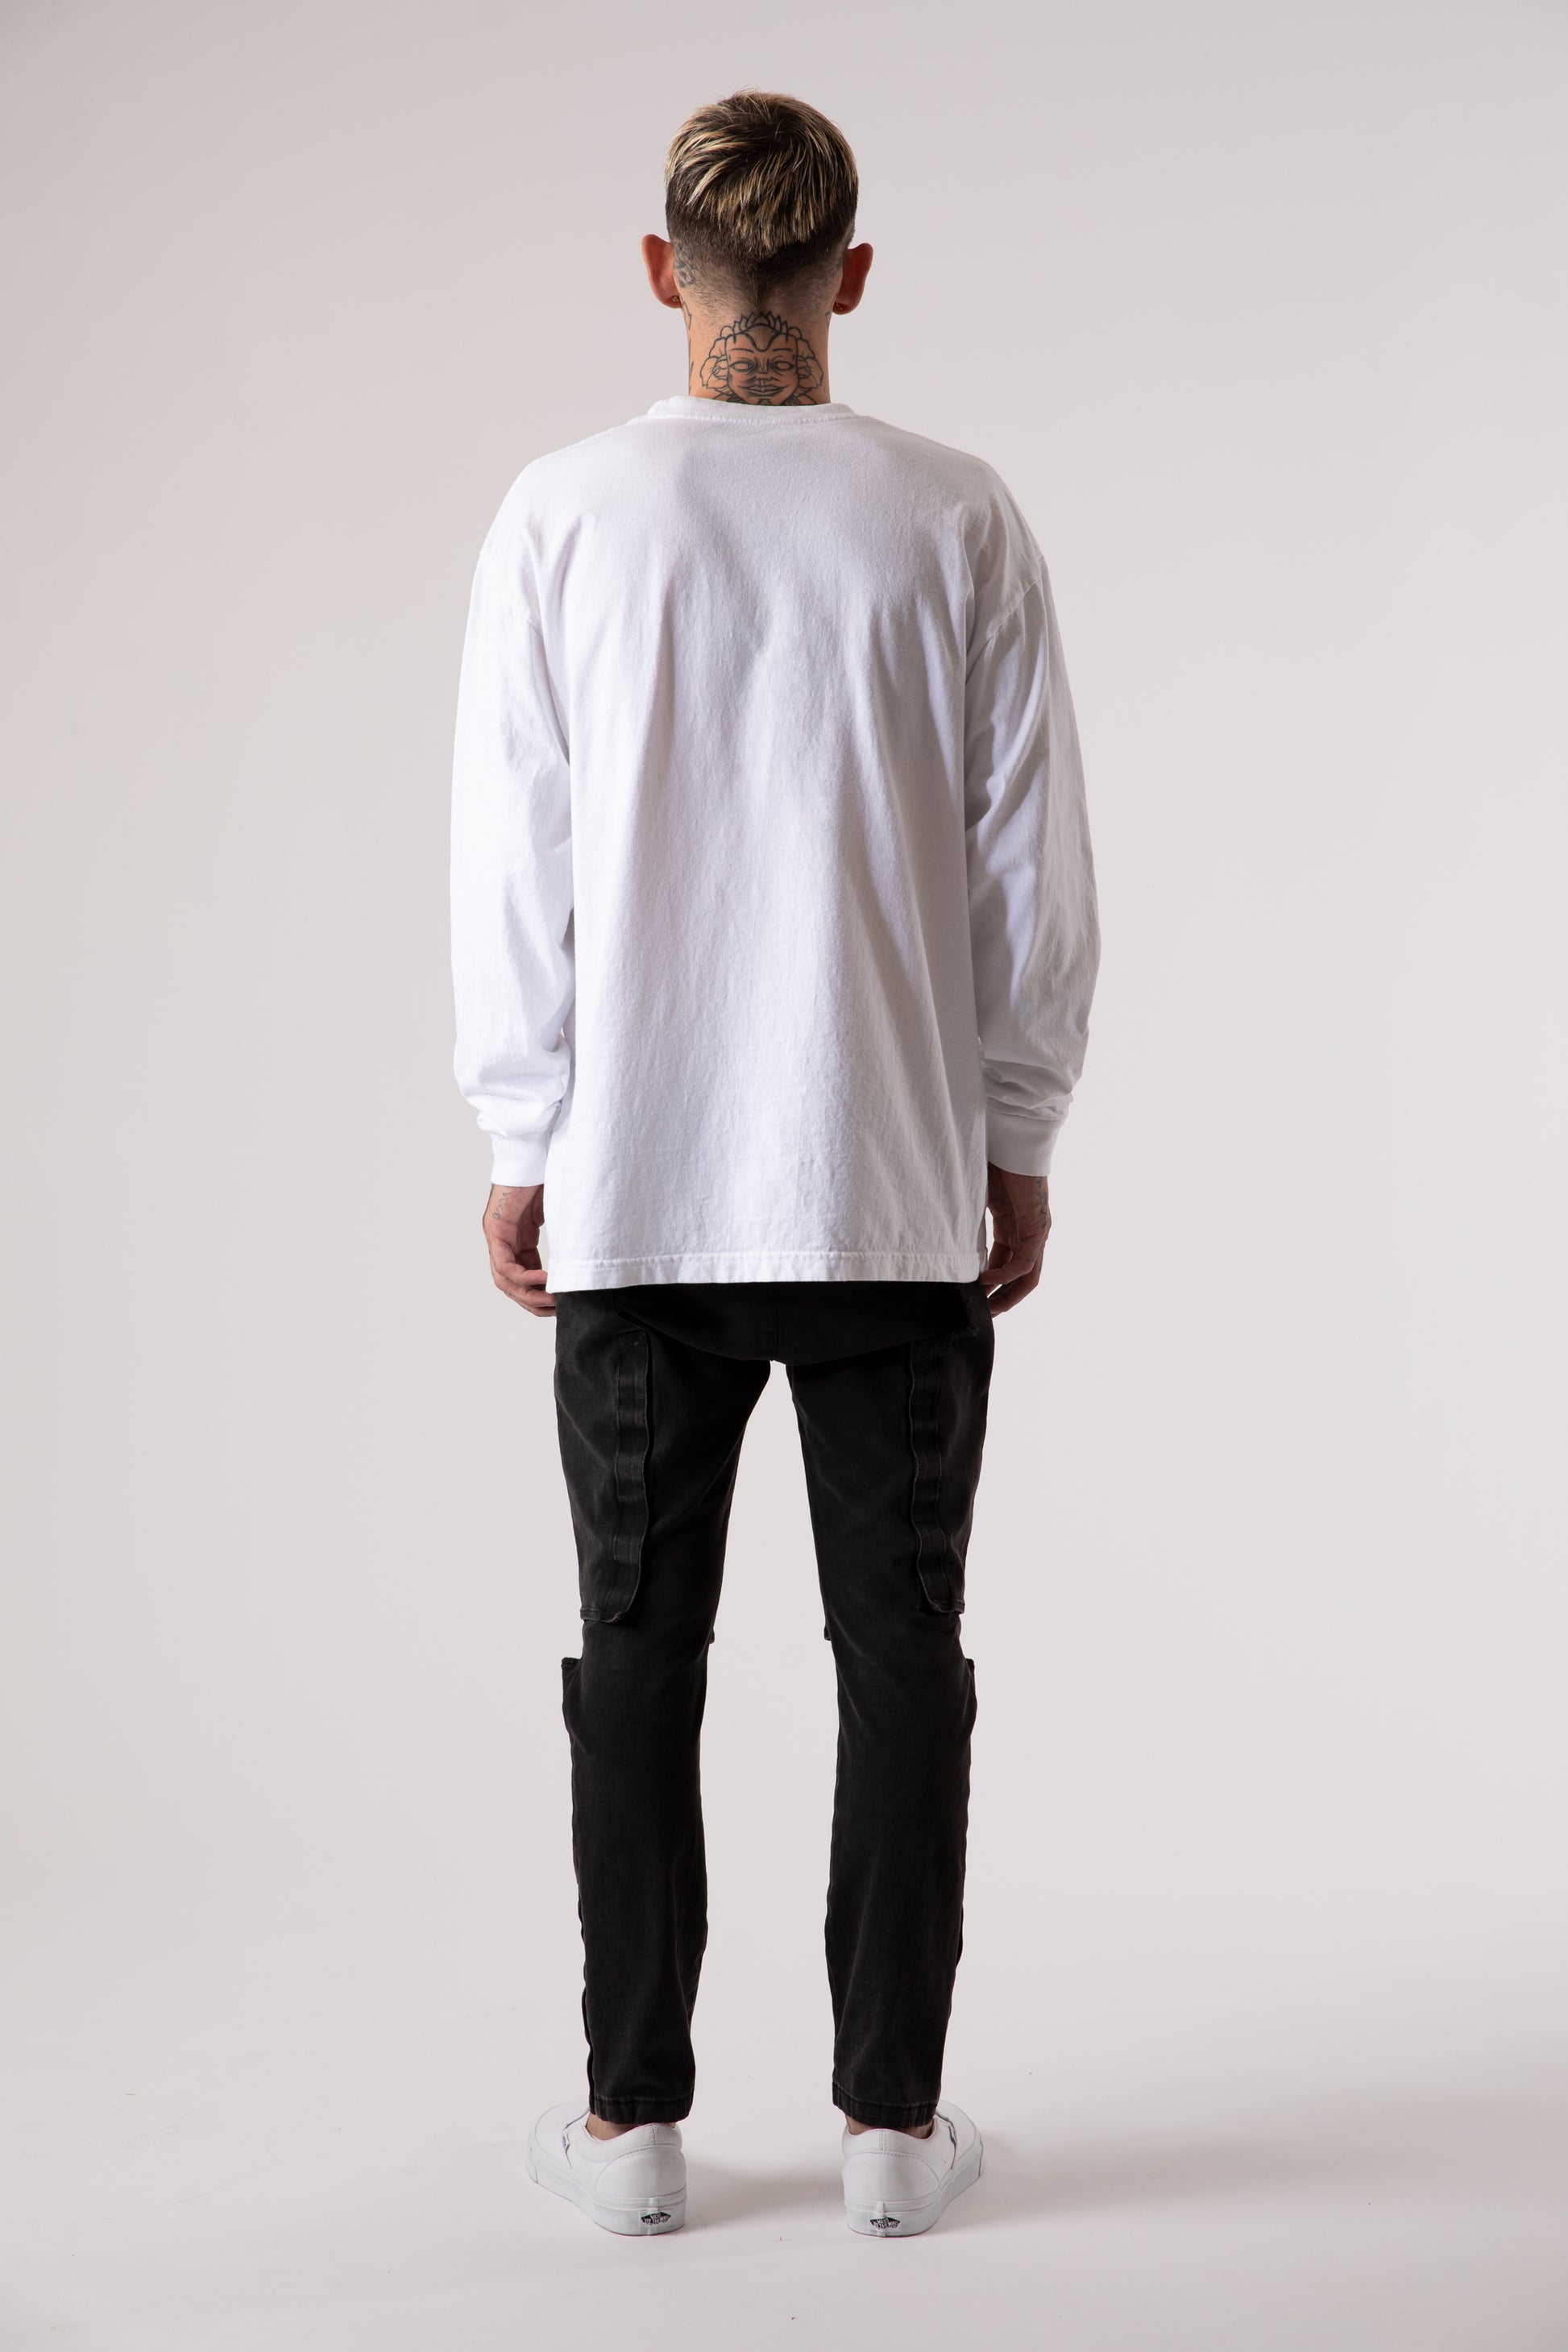 Sixelar Long sleeve White blank t-shirt back view